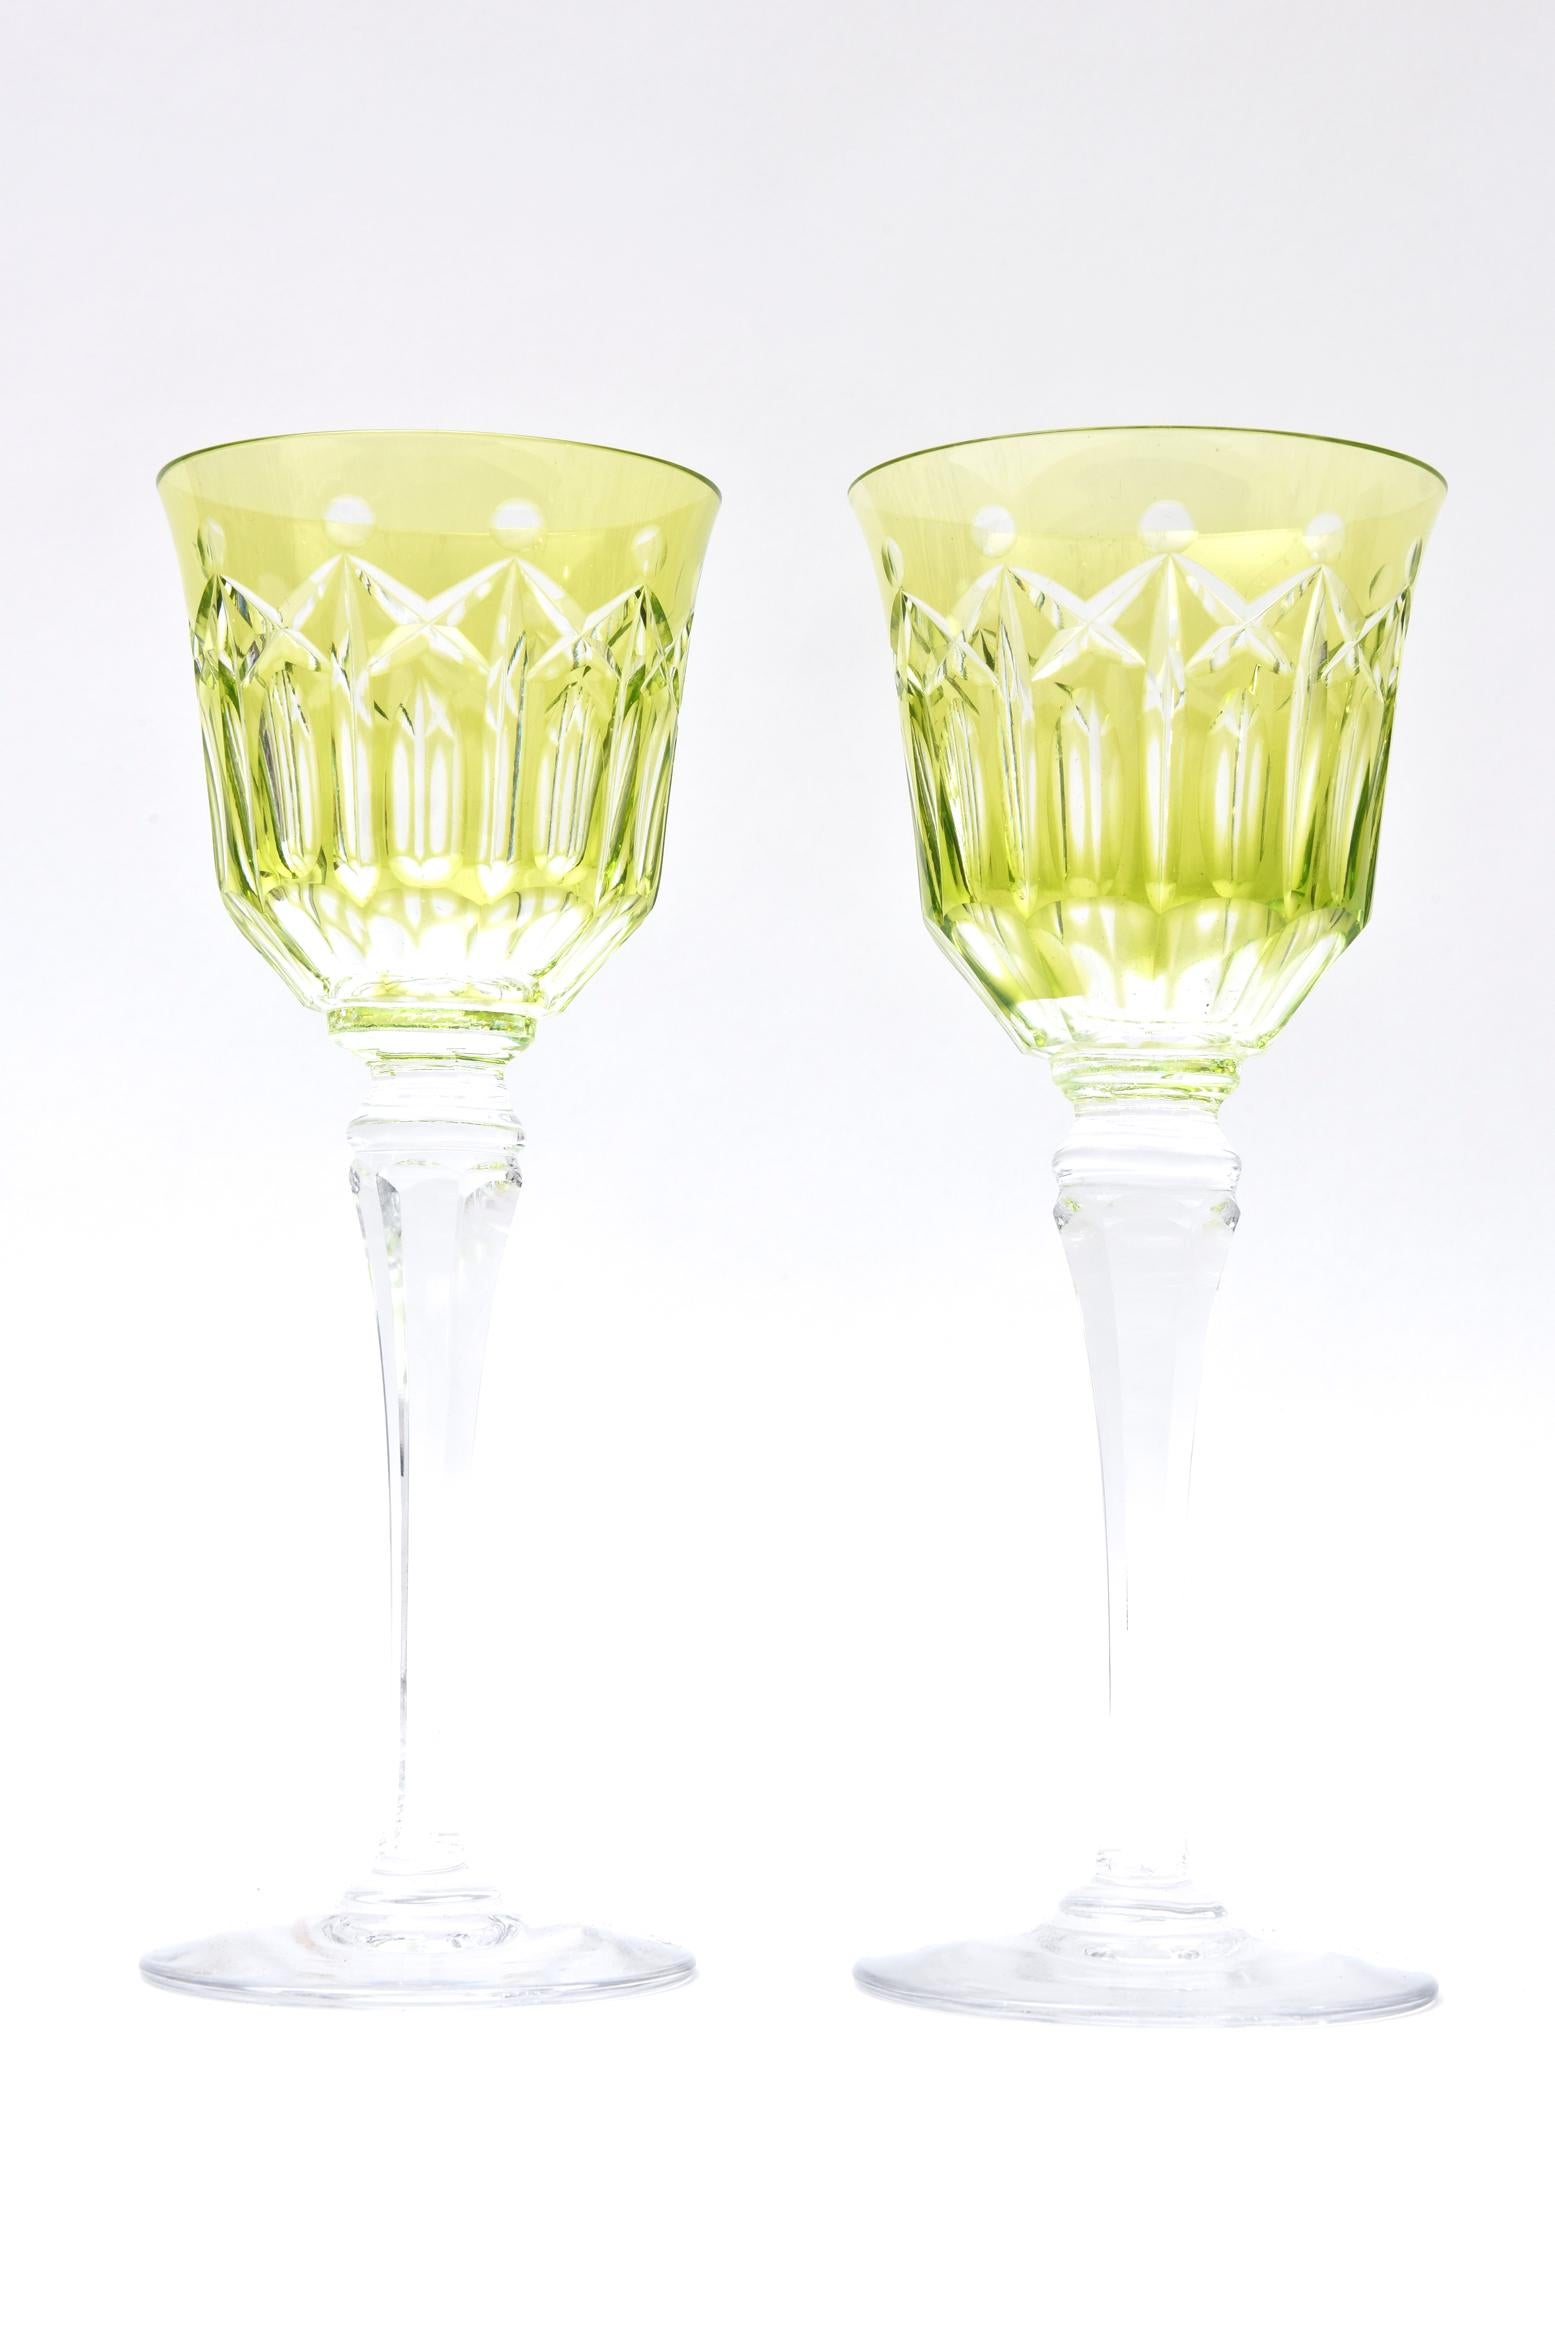 Set of 11 Crystal Wine Glasses, Great Chartreuse Color, Vintage 1